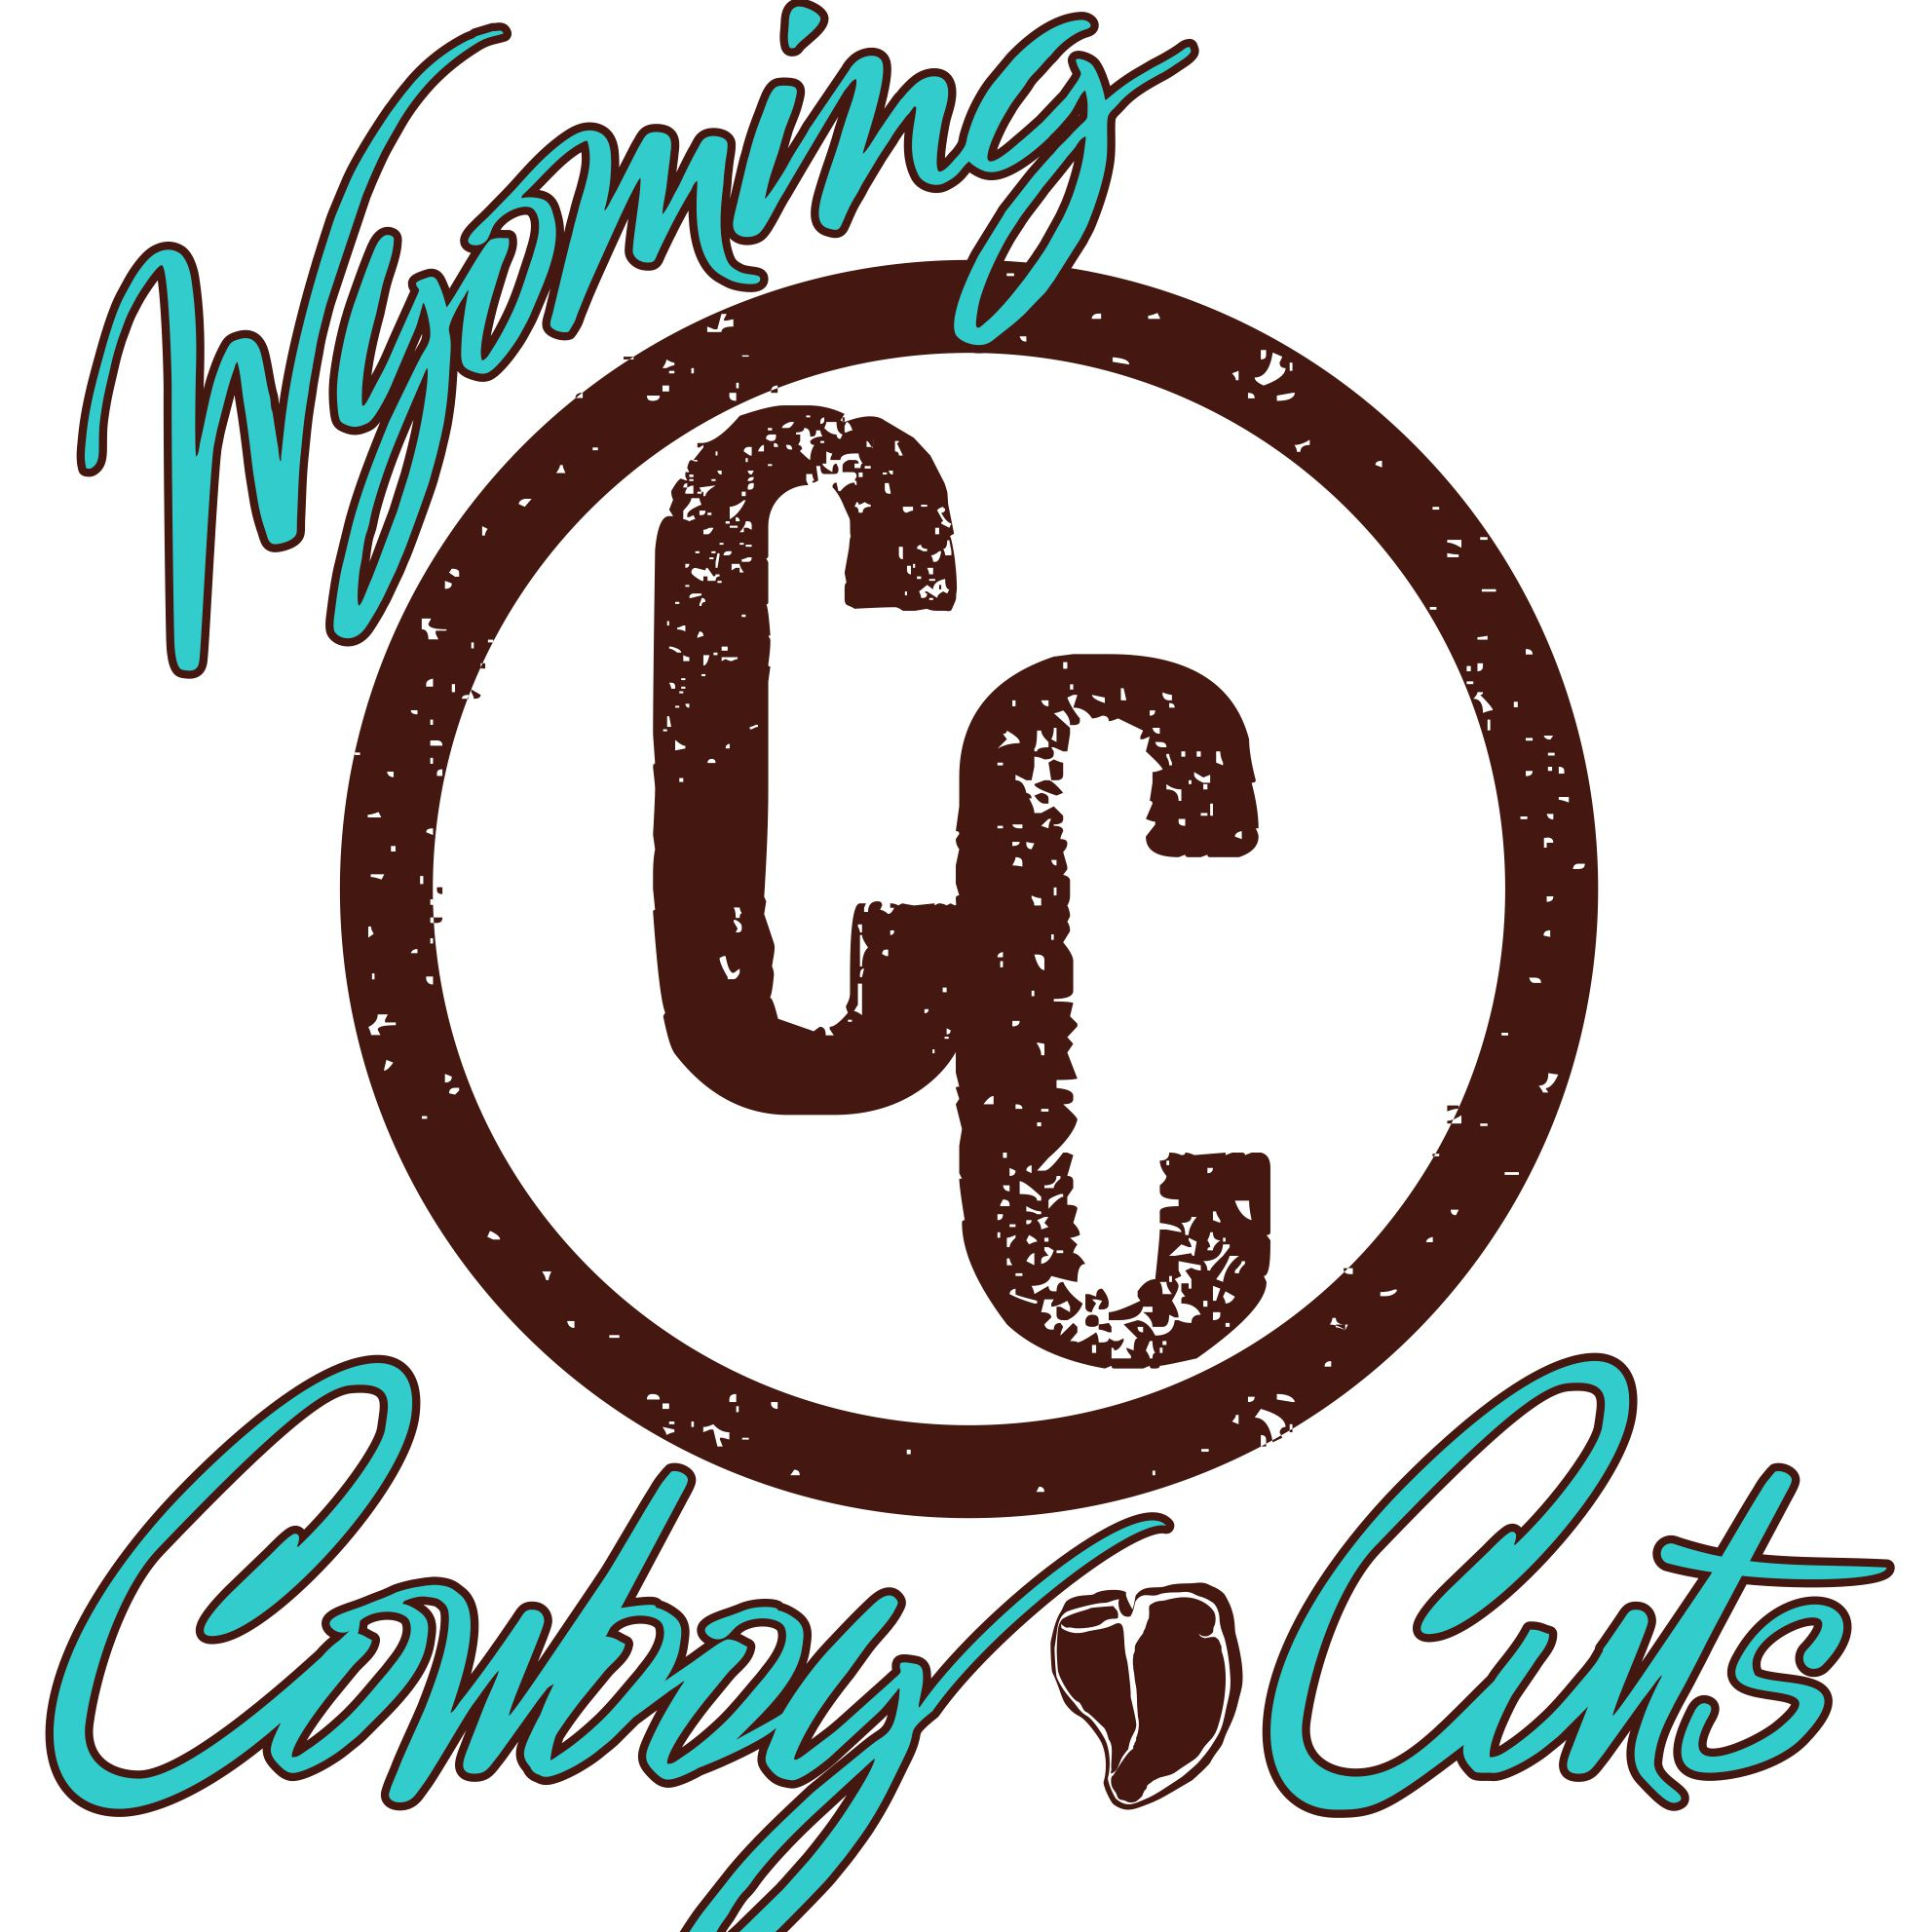 Wyoming Cowboy Cuts